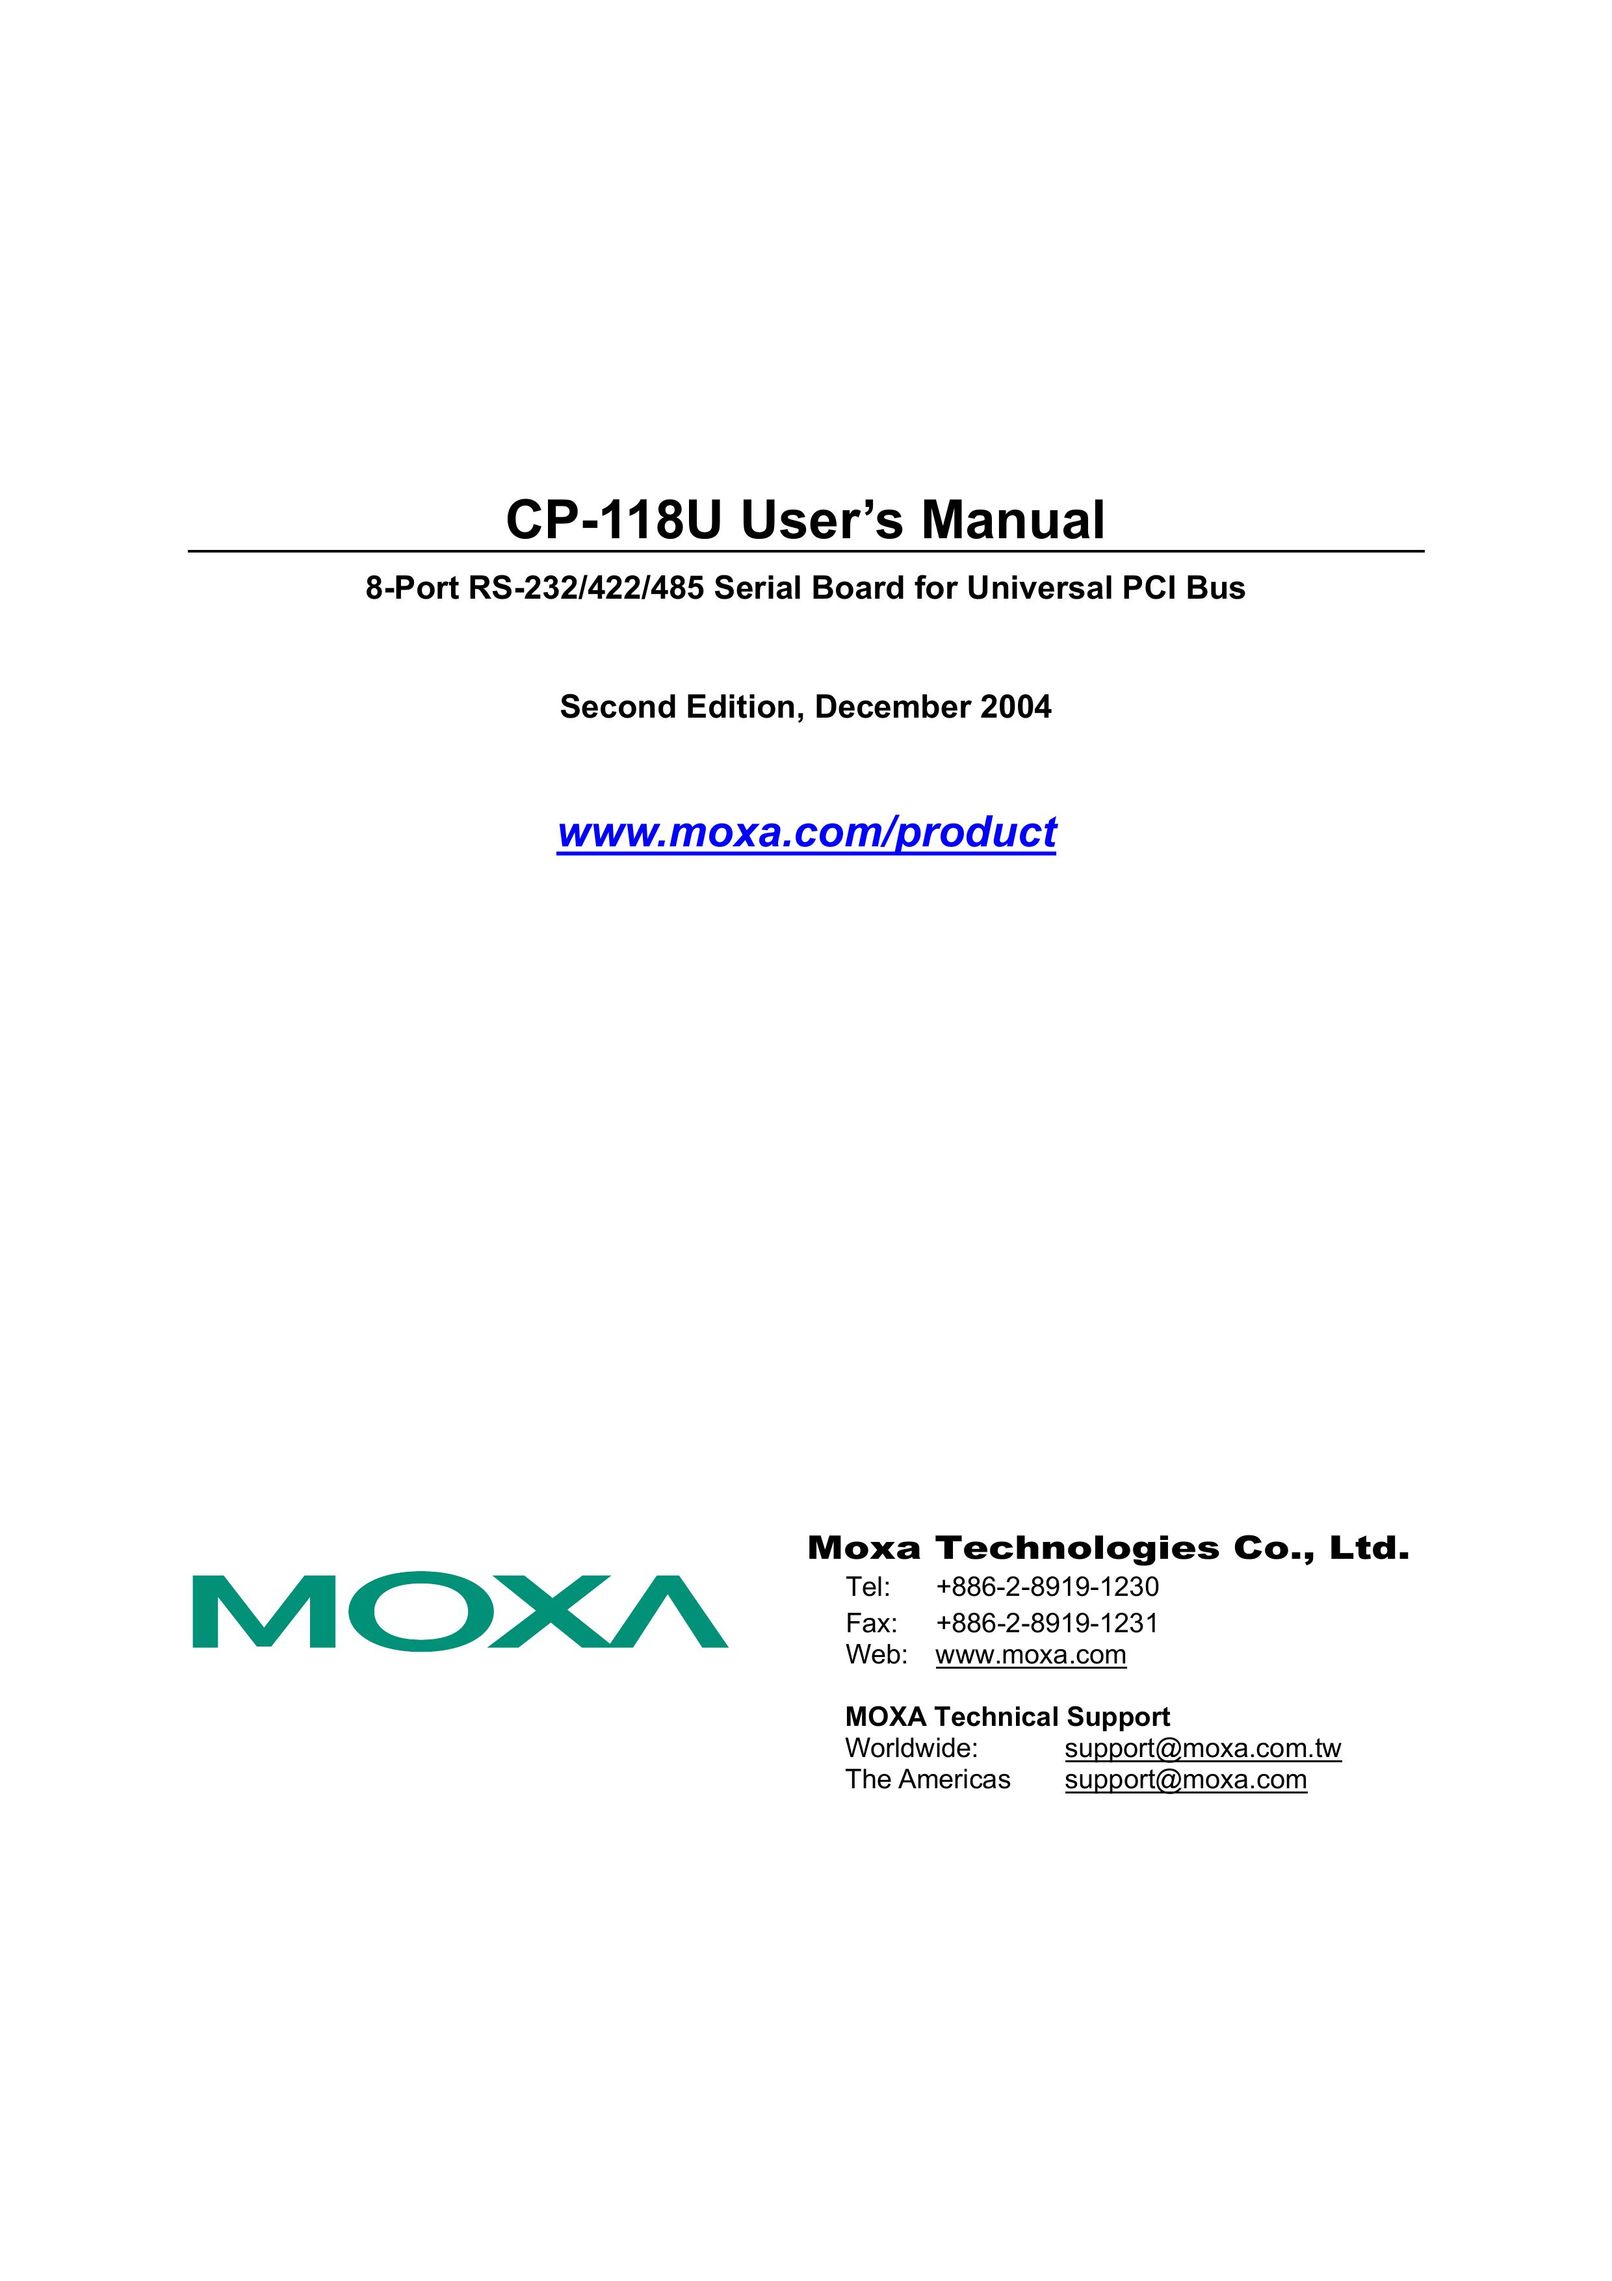 Moxa Technologies CP-118U Network Card User Manual